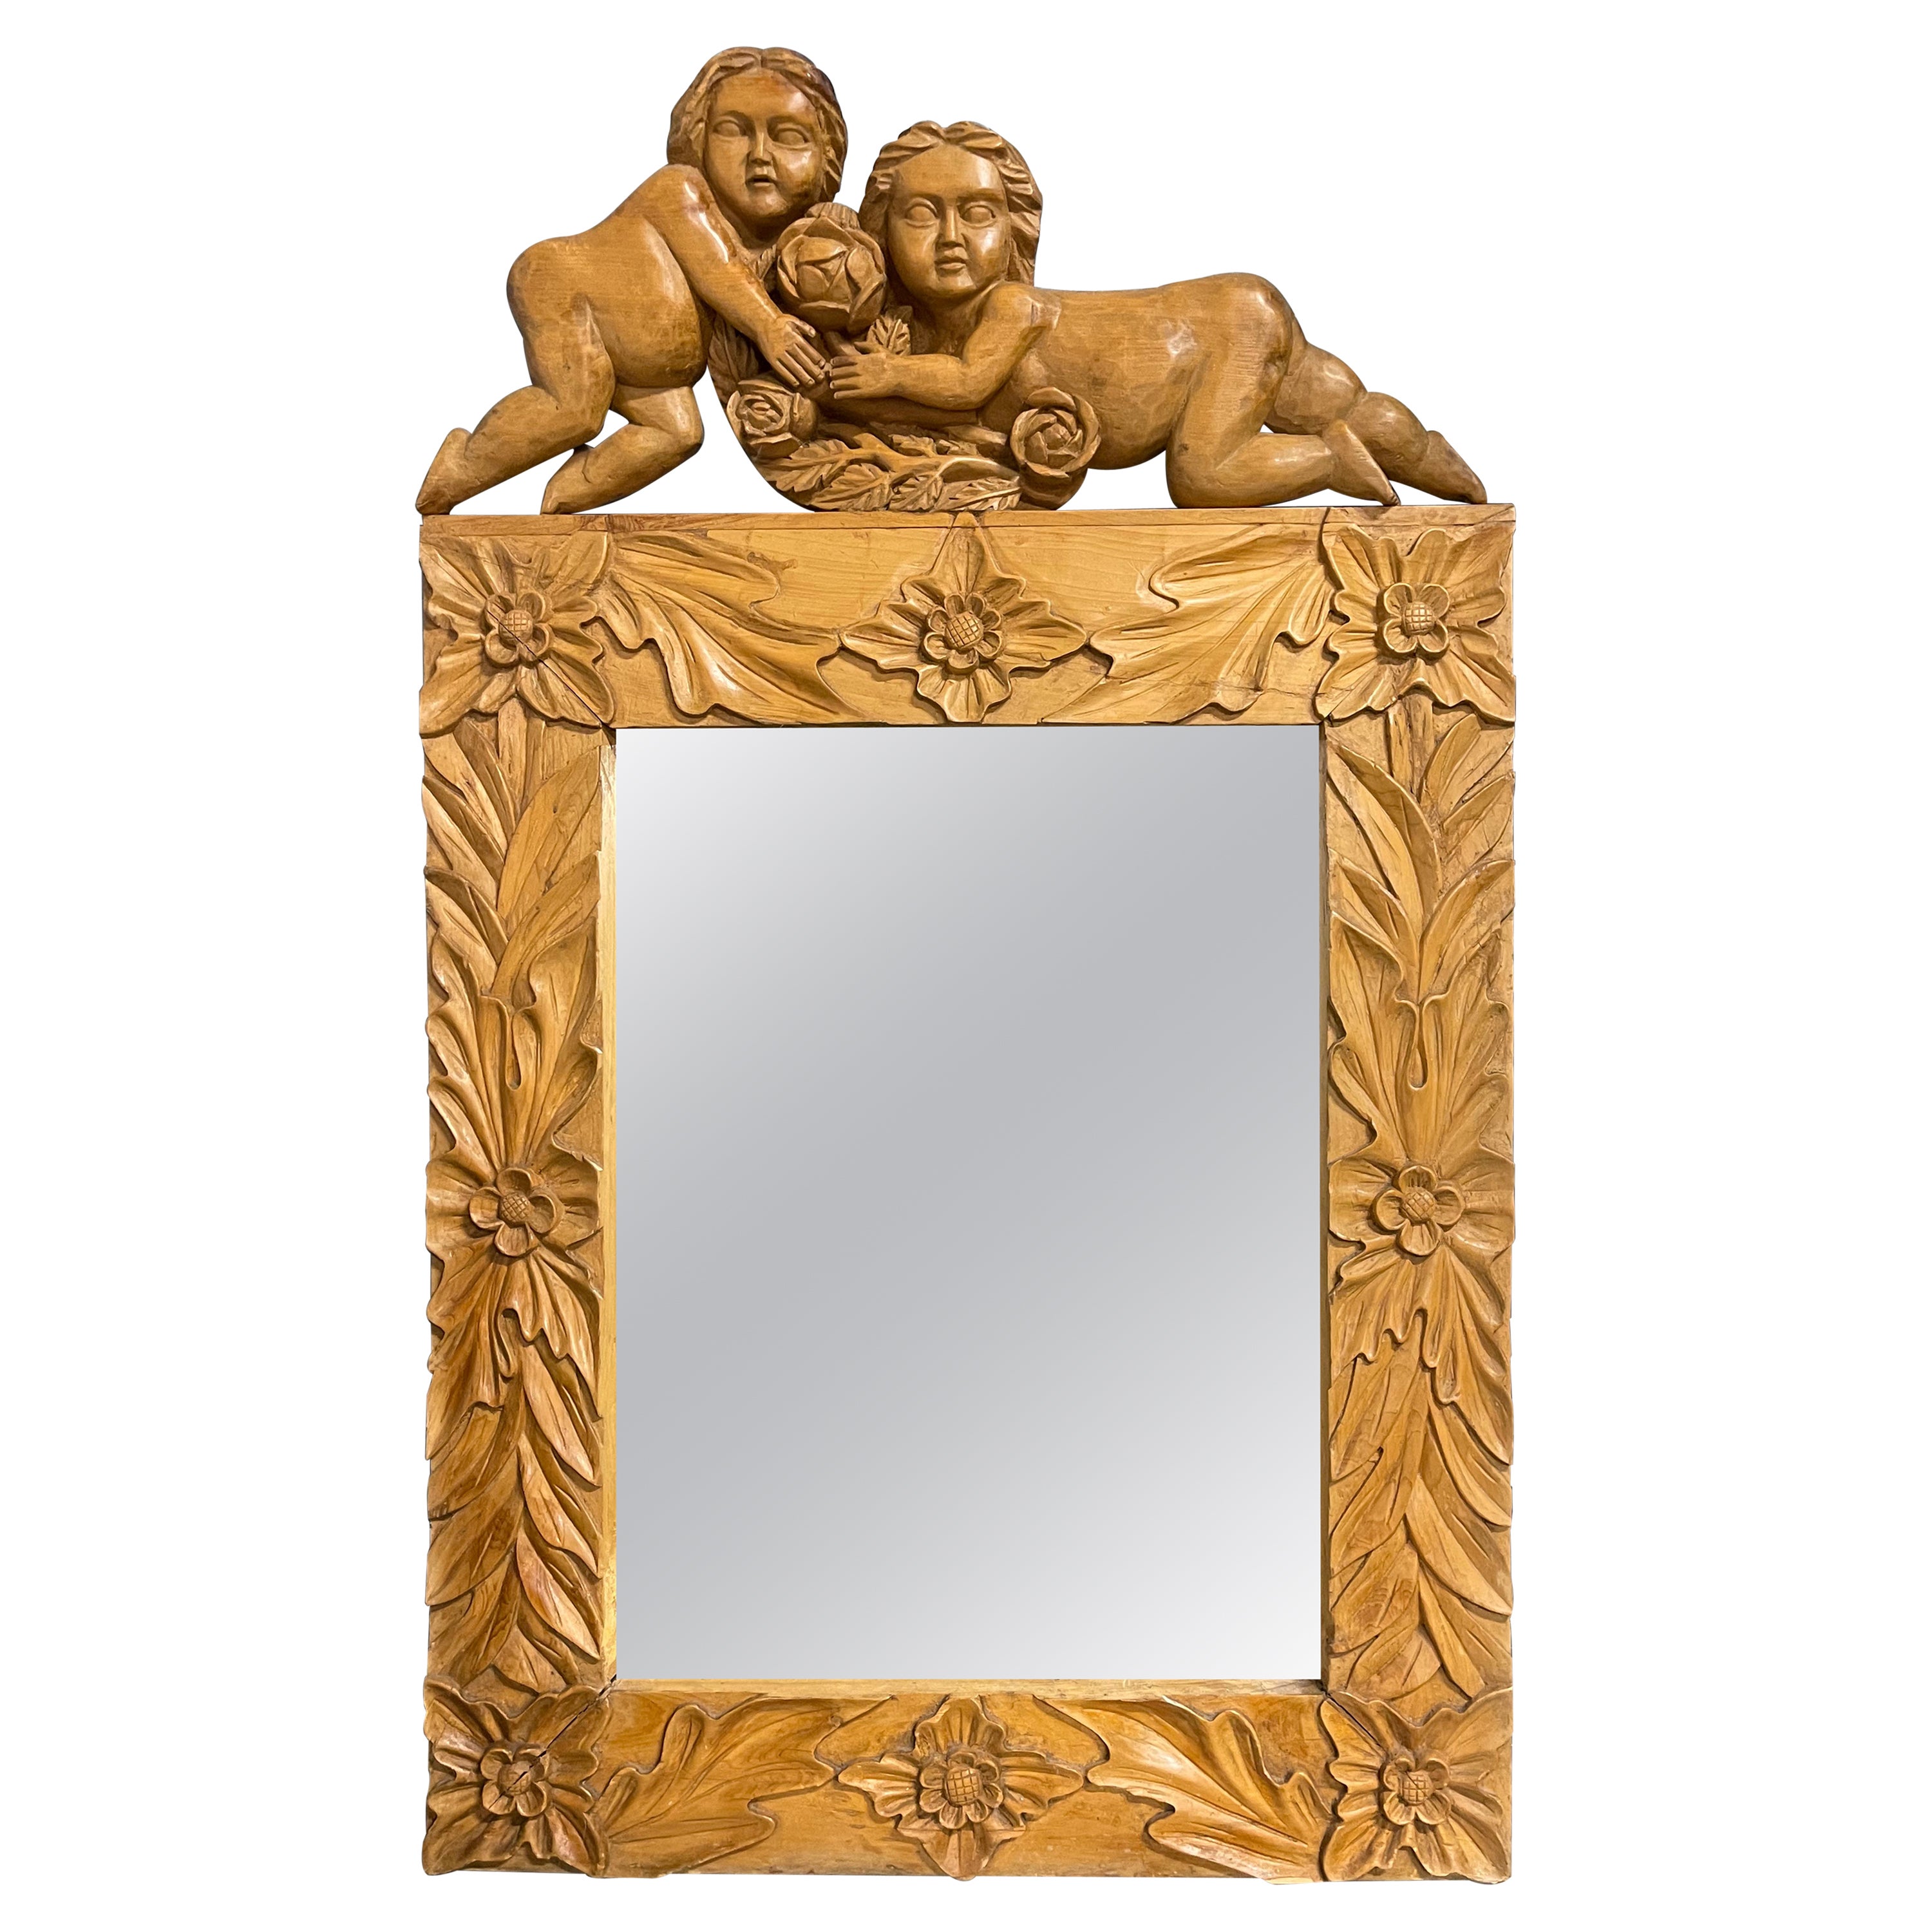 Miroir chérubin sculpté de style colonial espagnol